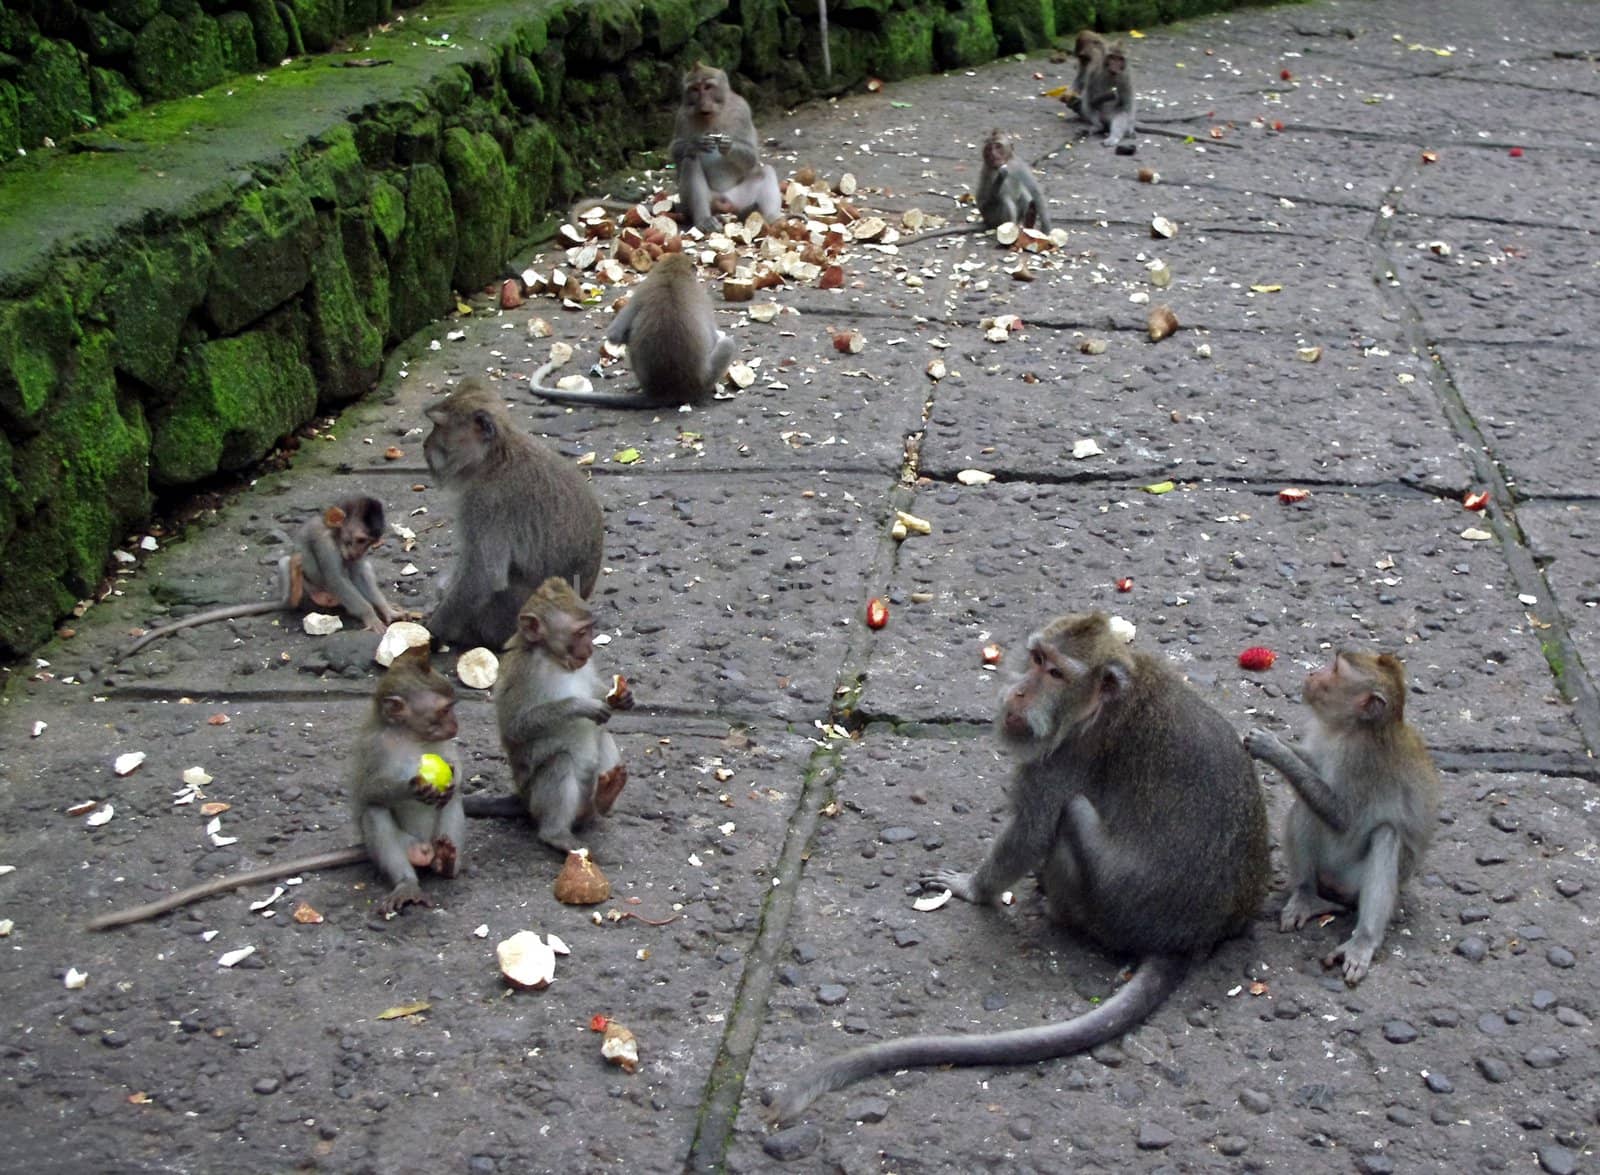 Monkeys eating together in Monkey Forest, Ubud, Bali, Indonesia.